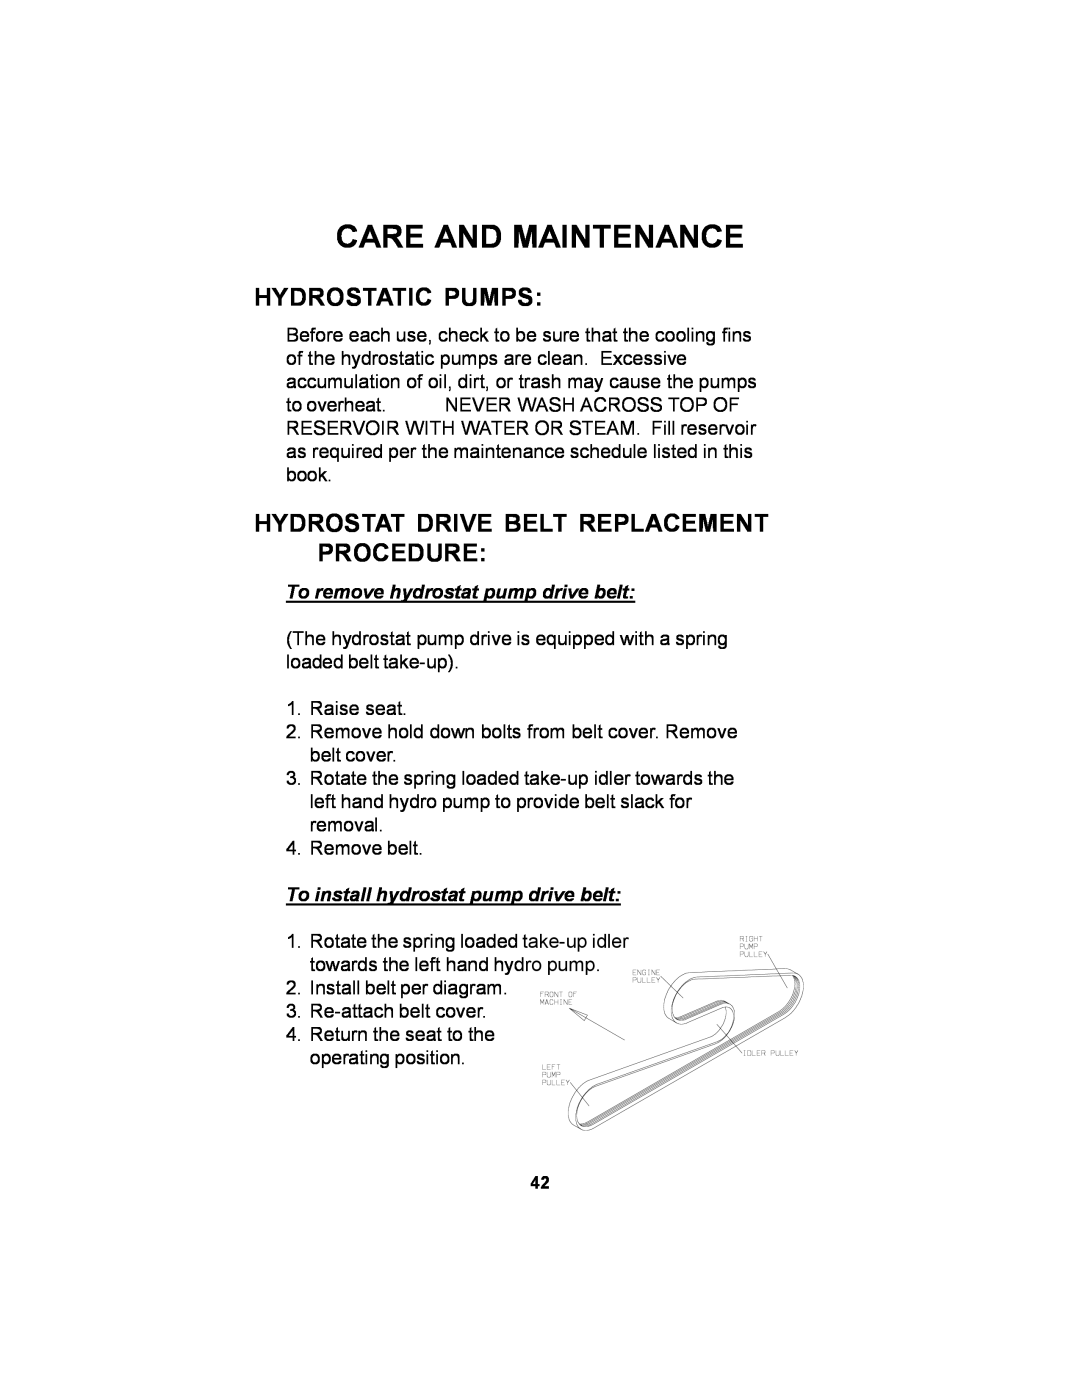 Dixon 12881-106 manual Hydrostatic Pumps, Hydrostat Drive Belt Replacement Procedure, Care And Maintenance 